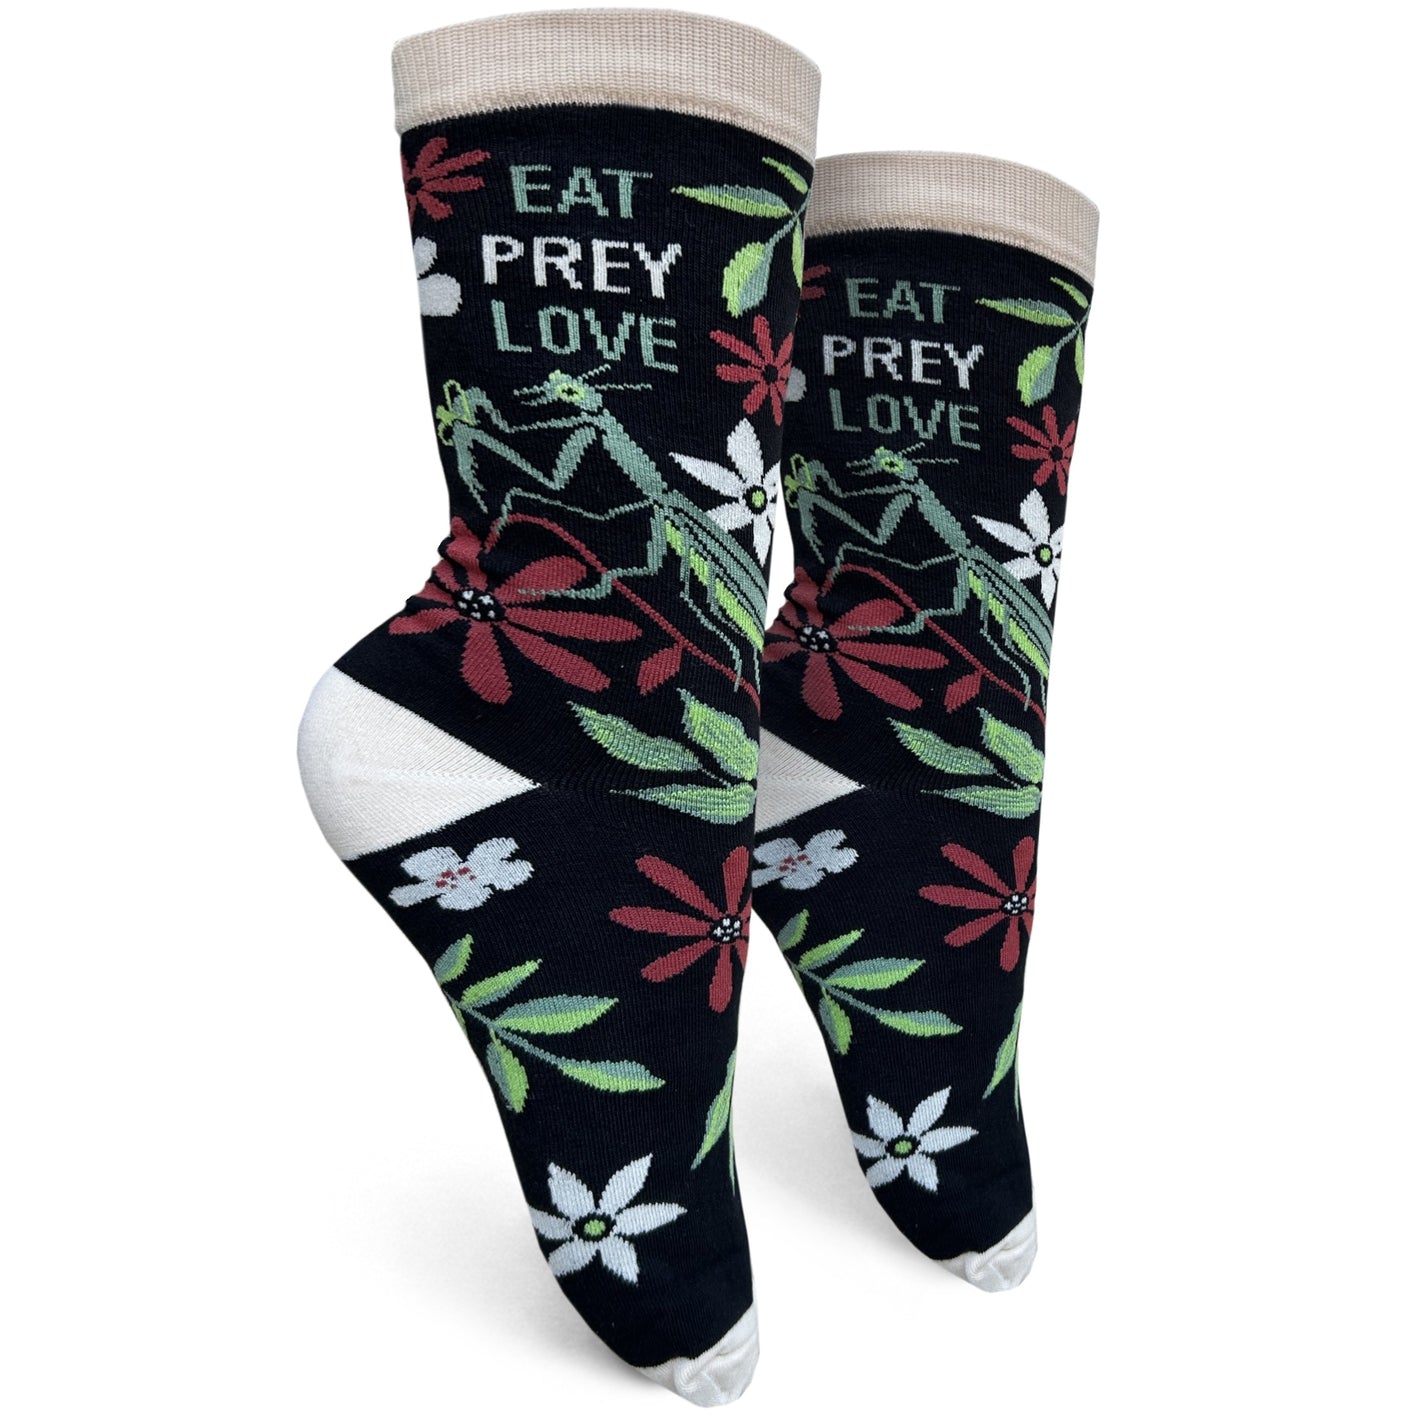 Eat, Prey, Love Womens Socks